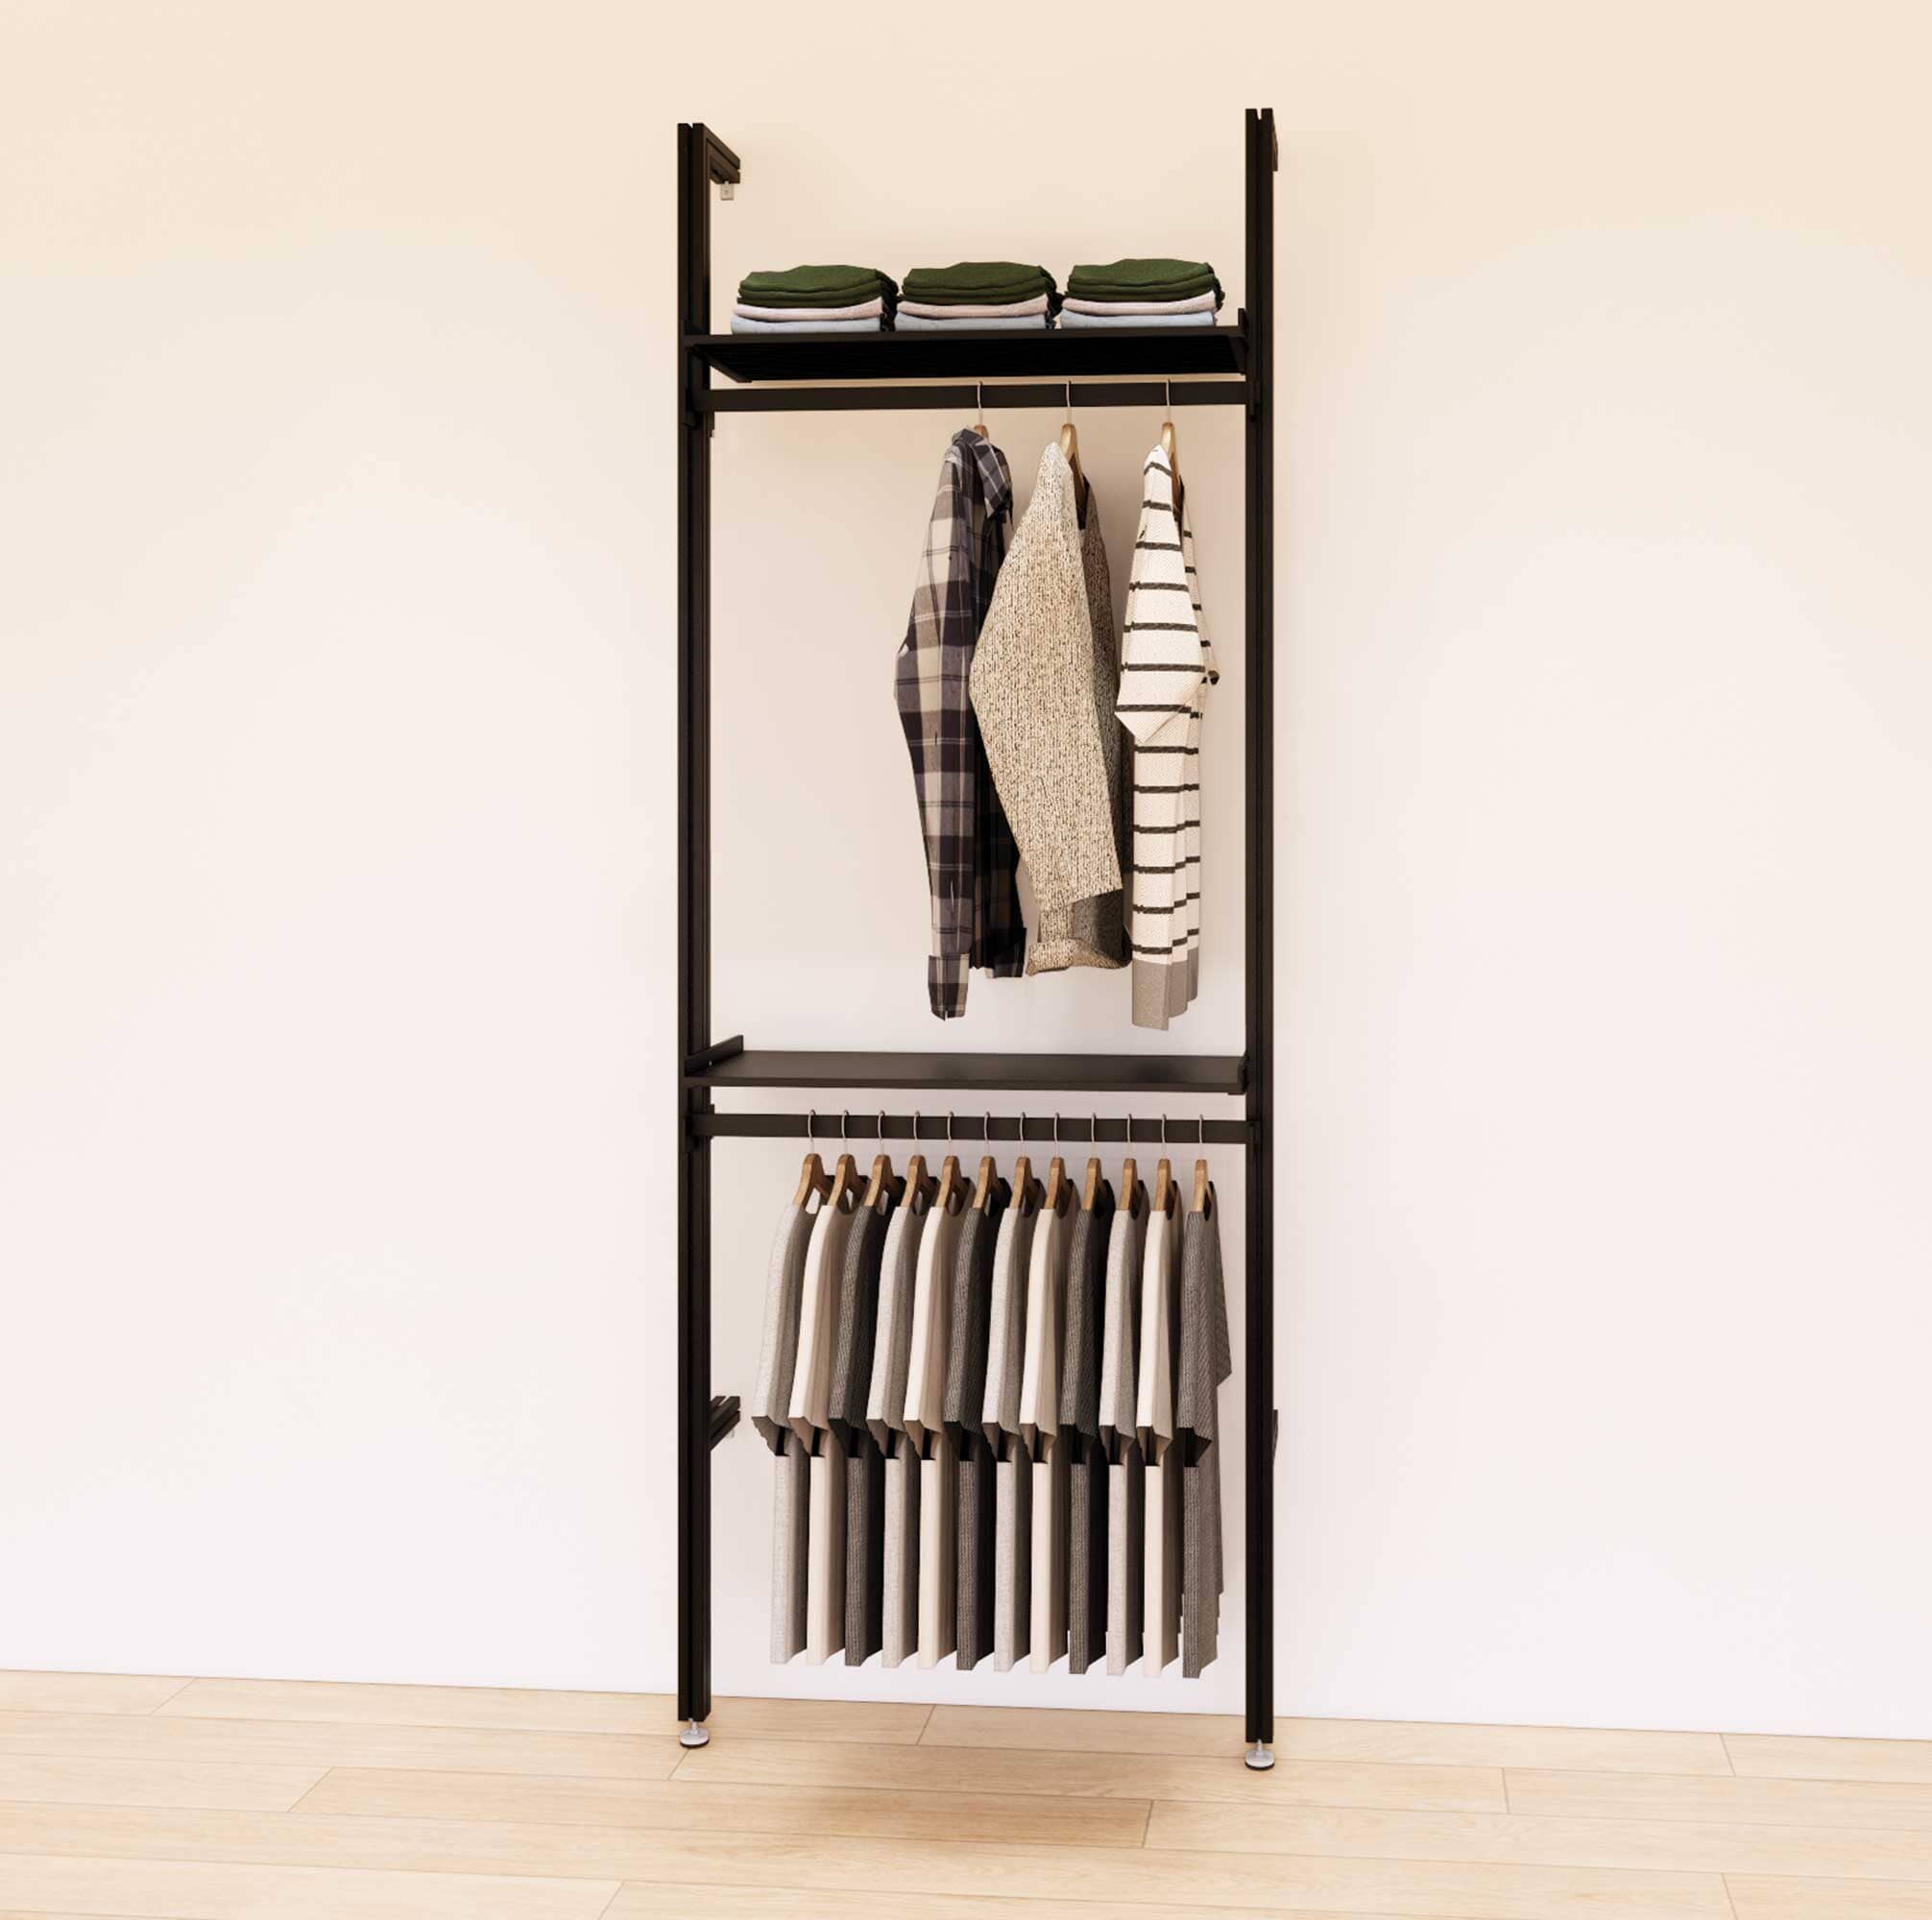 Retail Display Shelving with 2 Shelves + 2 Hanger Bars